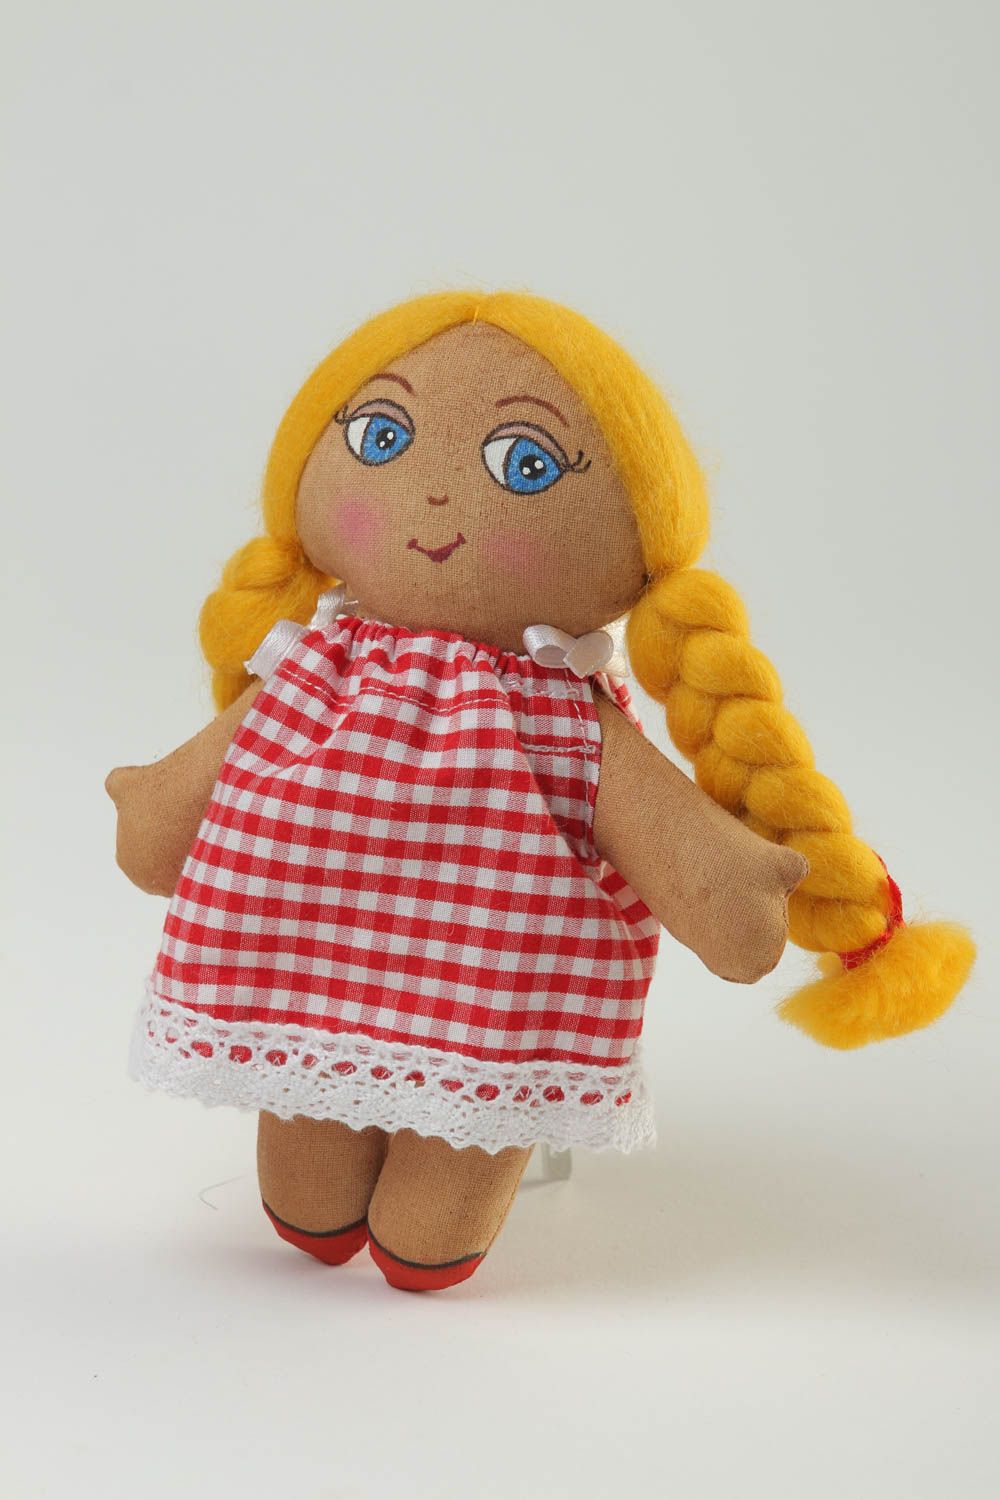 Handmade fabric soft toy rag doll childrens toys interior design styles photo 2